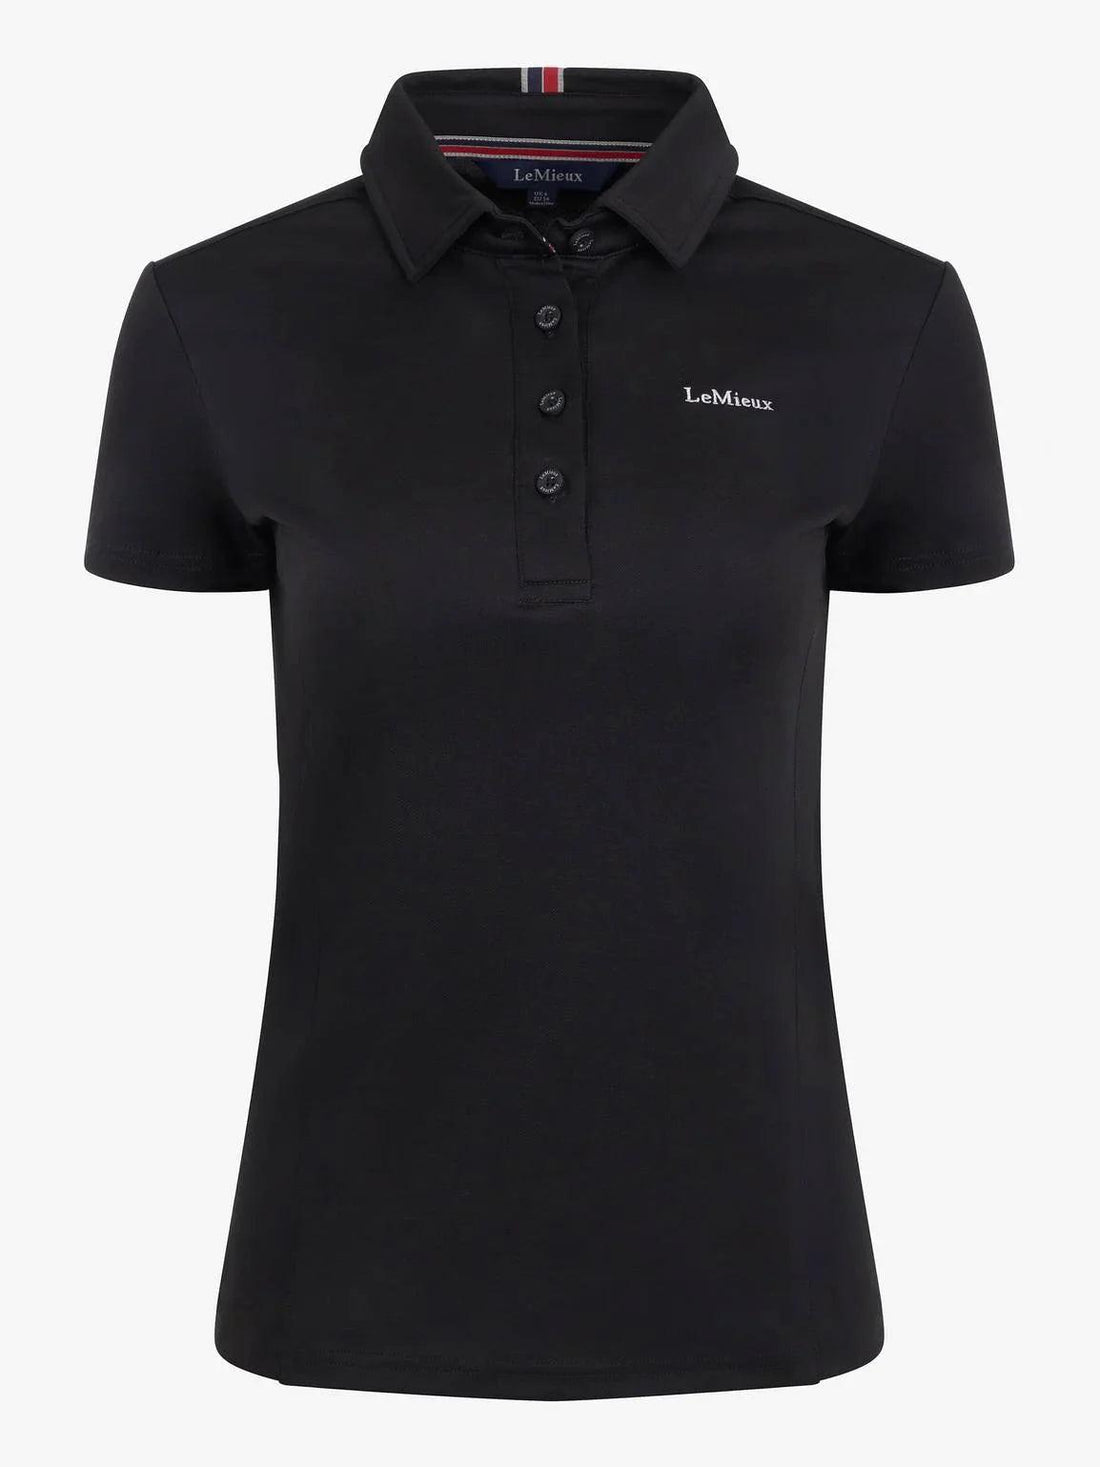 LeMieux elite polo shirt for ladies - HorseworldEU